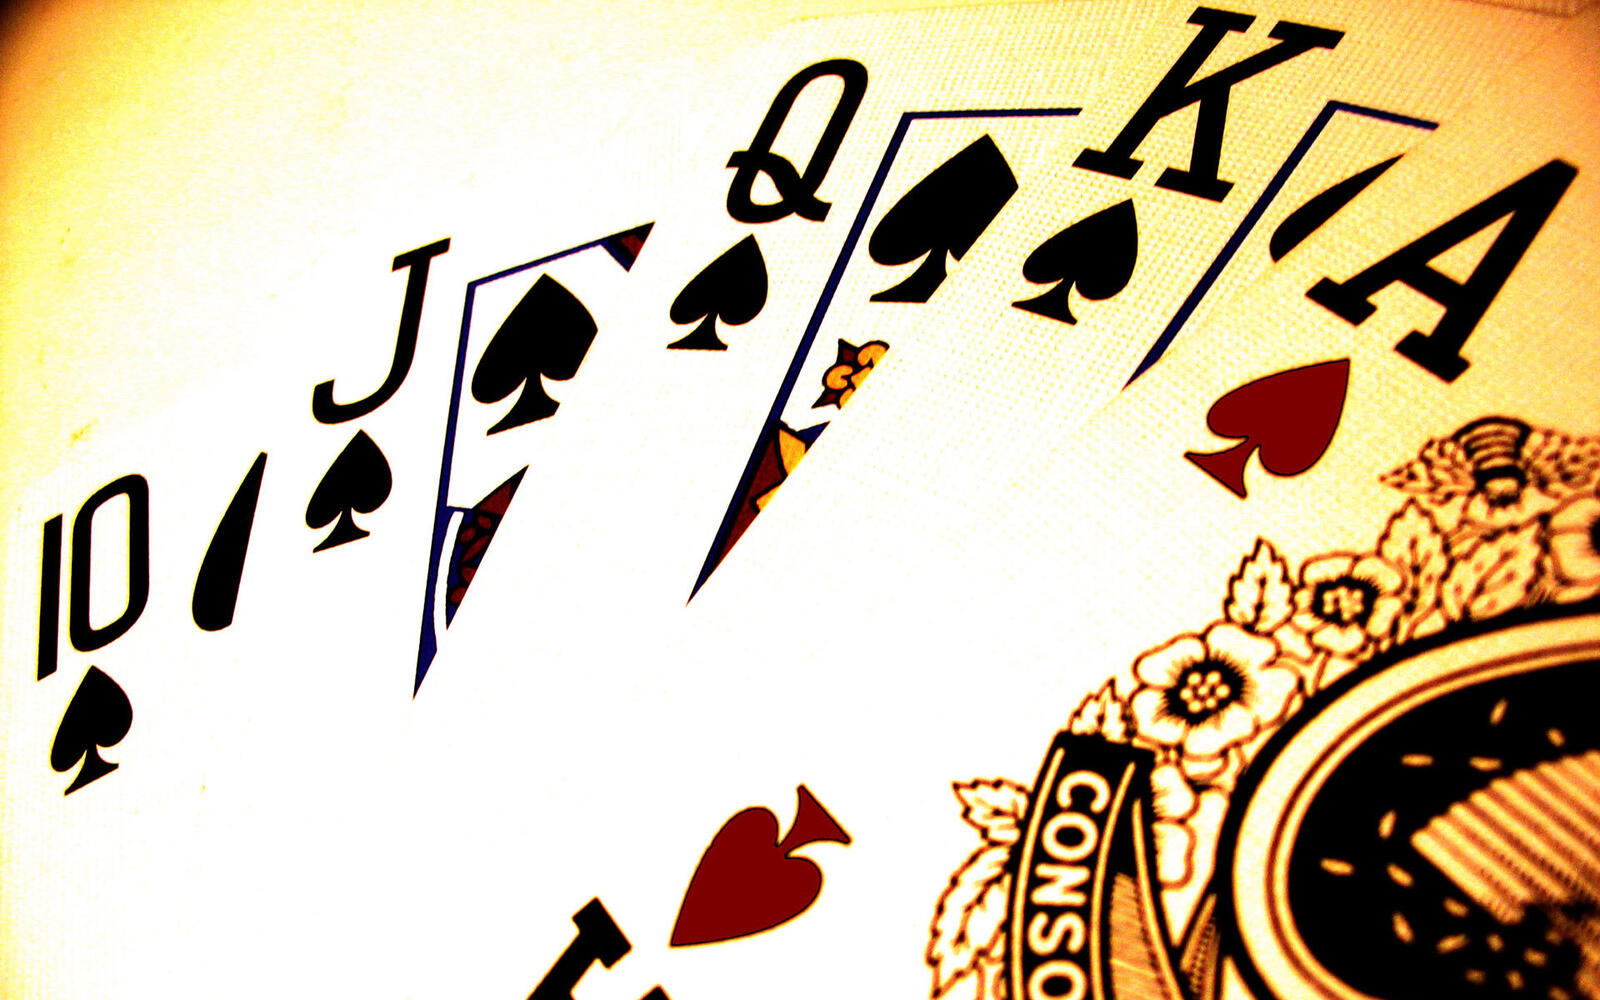 Wallpapers cards poker royal flush on the desktop